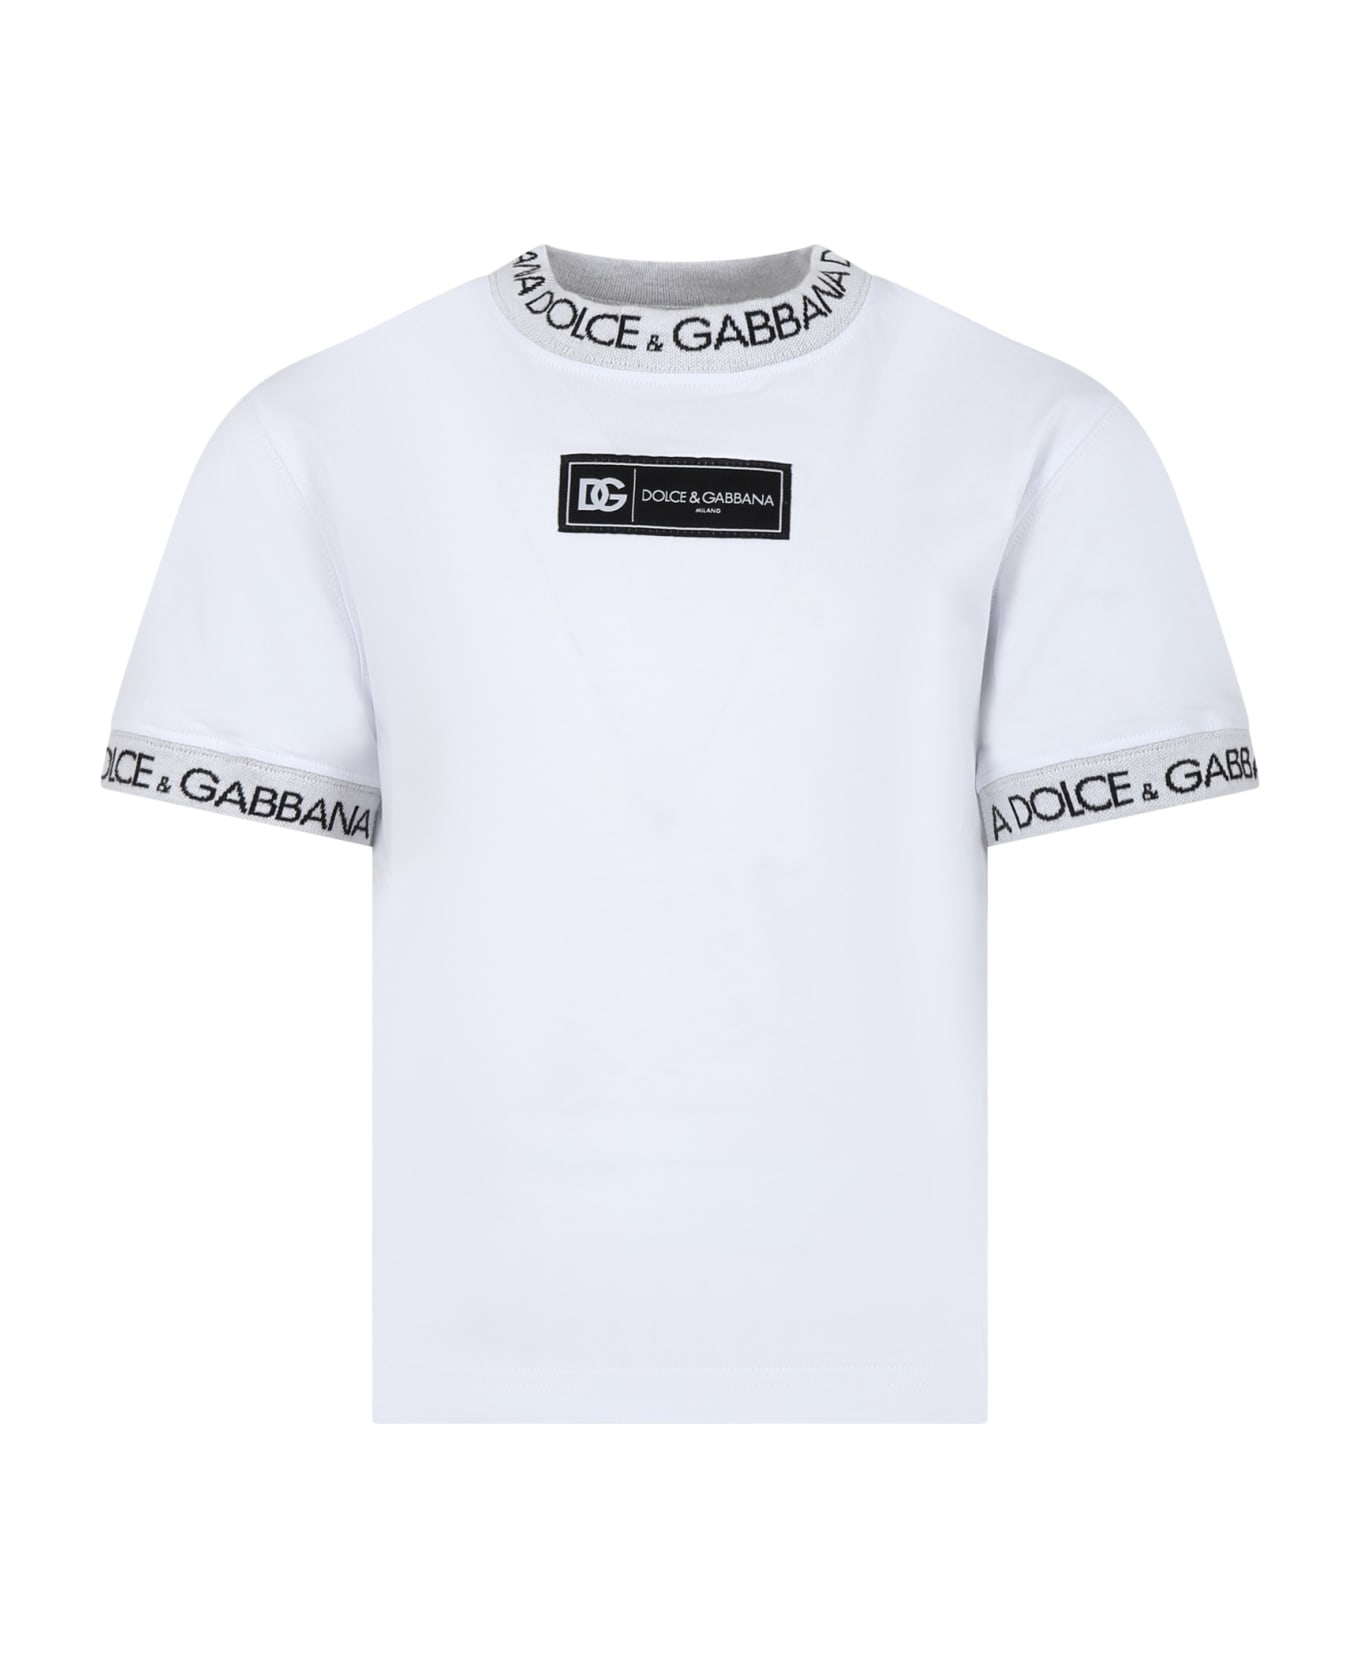 Dolce & Gabbana White T-shirt For Kids With Logo - Bianco